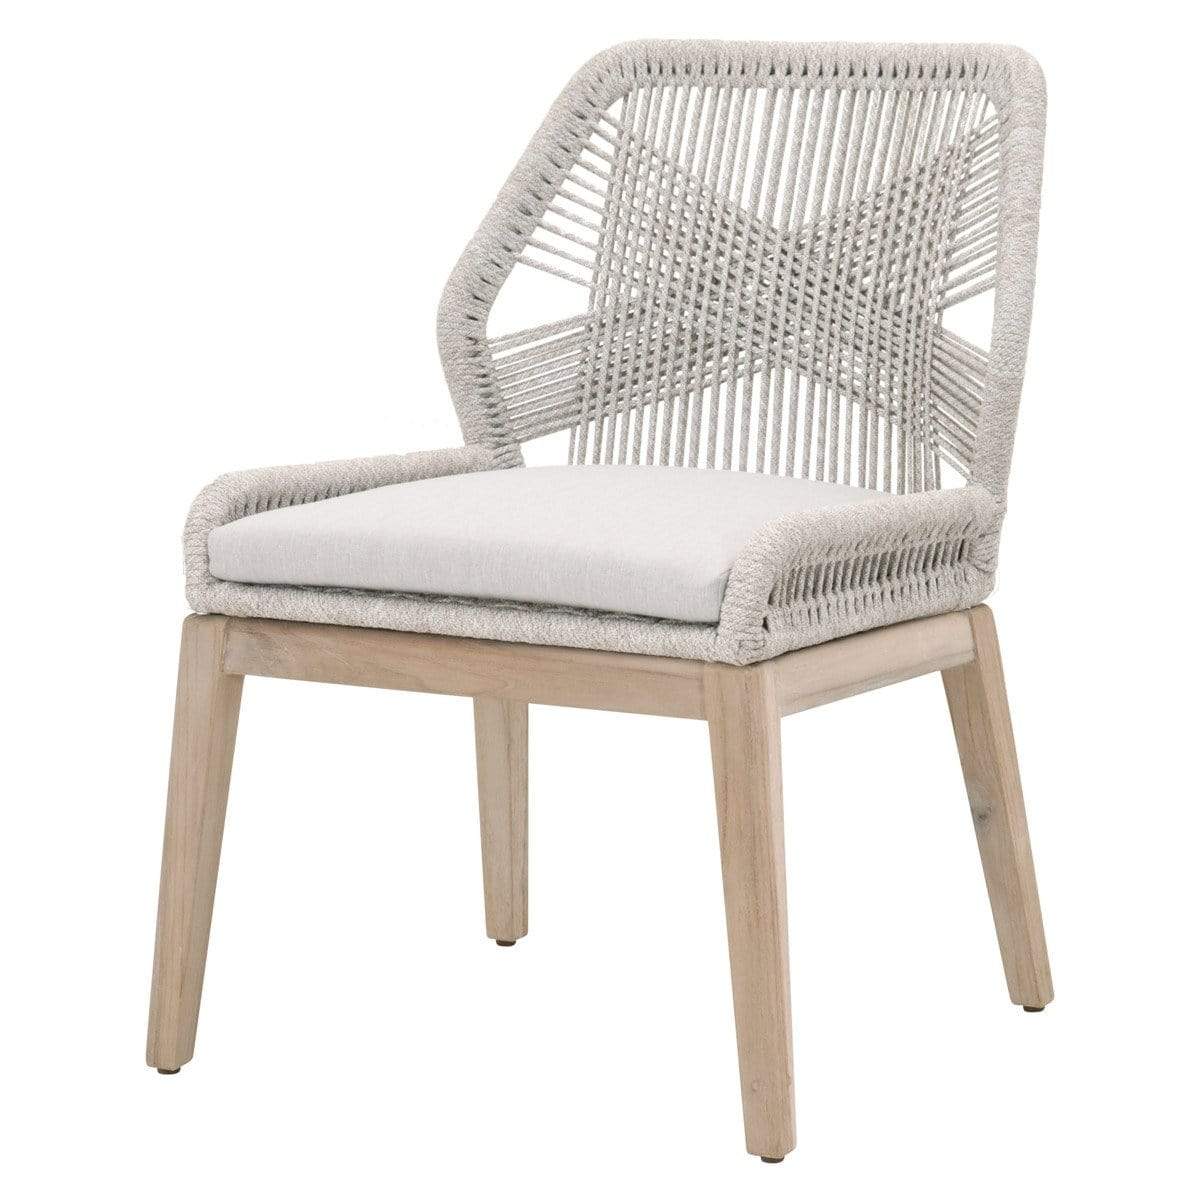 BLU Home Loom Outdoor Dining Chair - Platinum (Set of 2) Furniture orient-express-6808KD.WTA/PUM/GT 842279146573